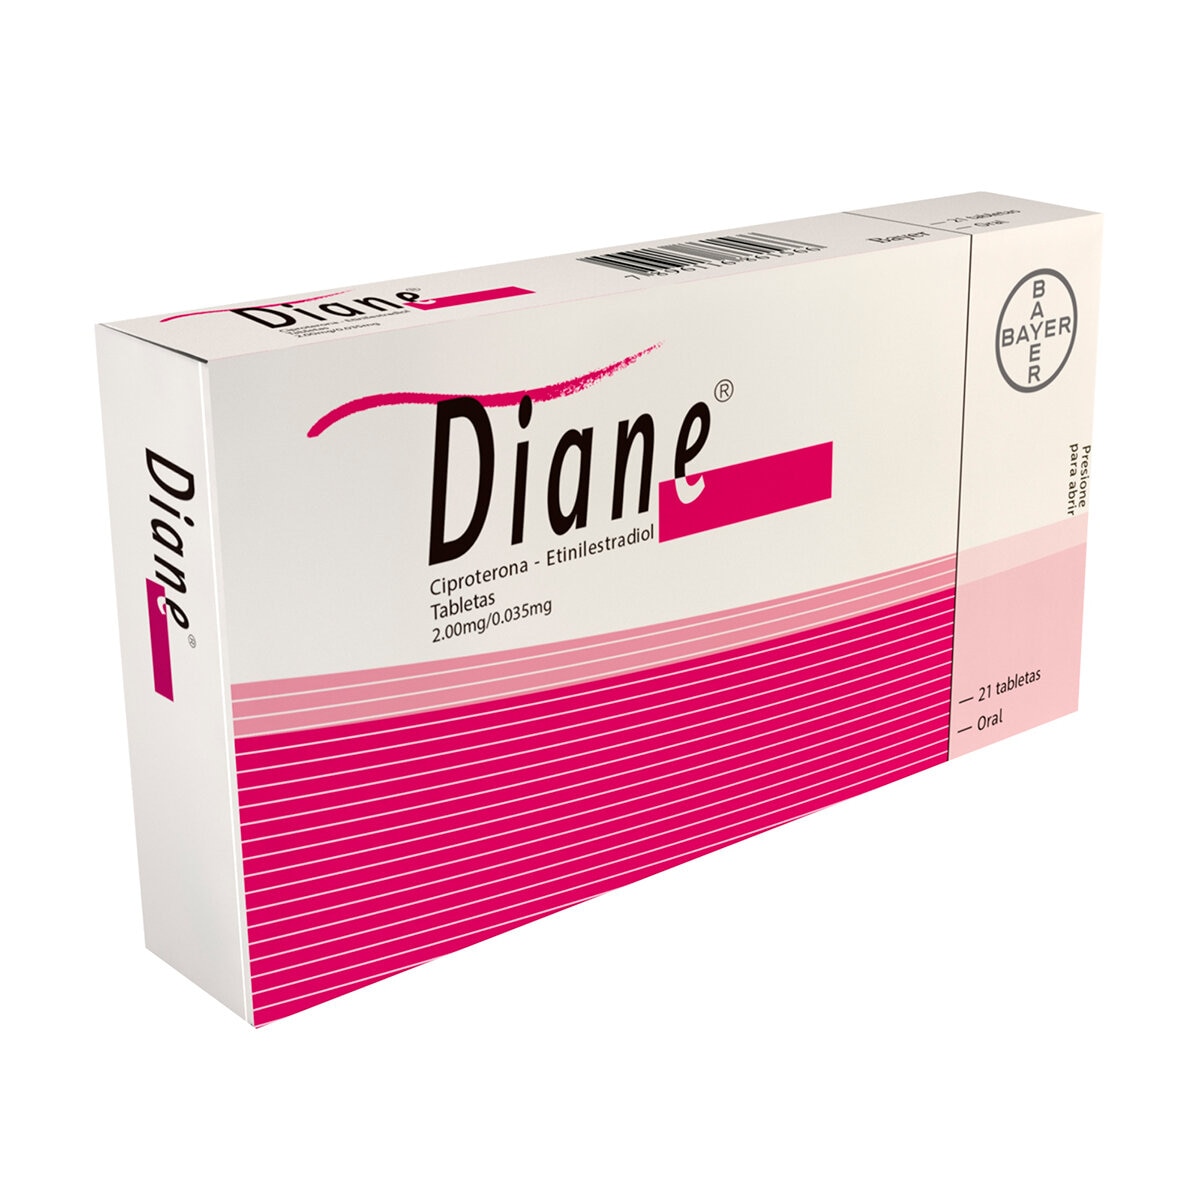 Diane 2mg /0.035 mg  21 Tabletas